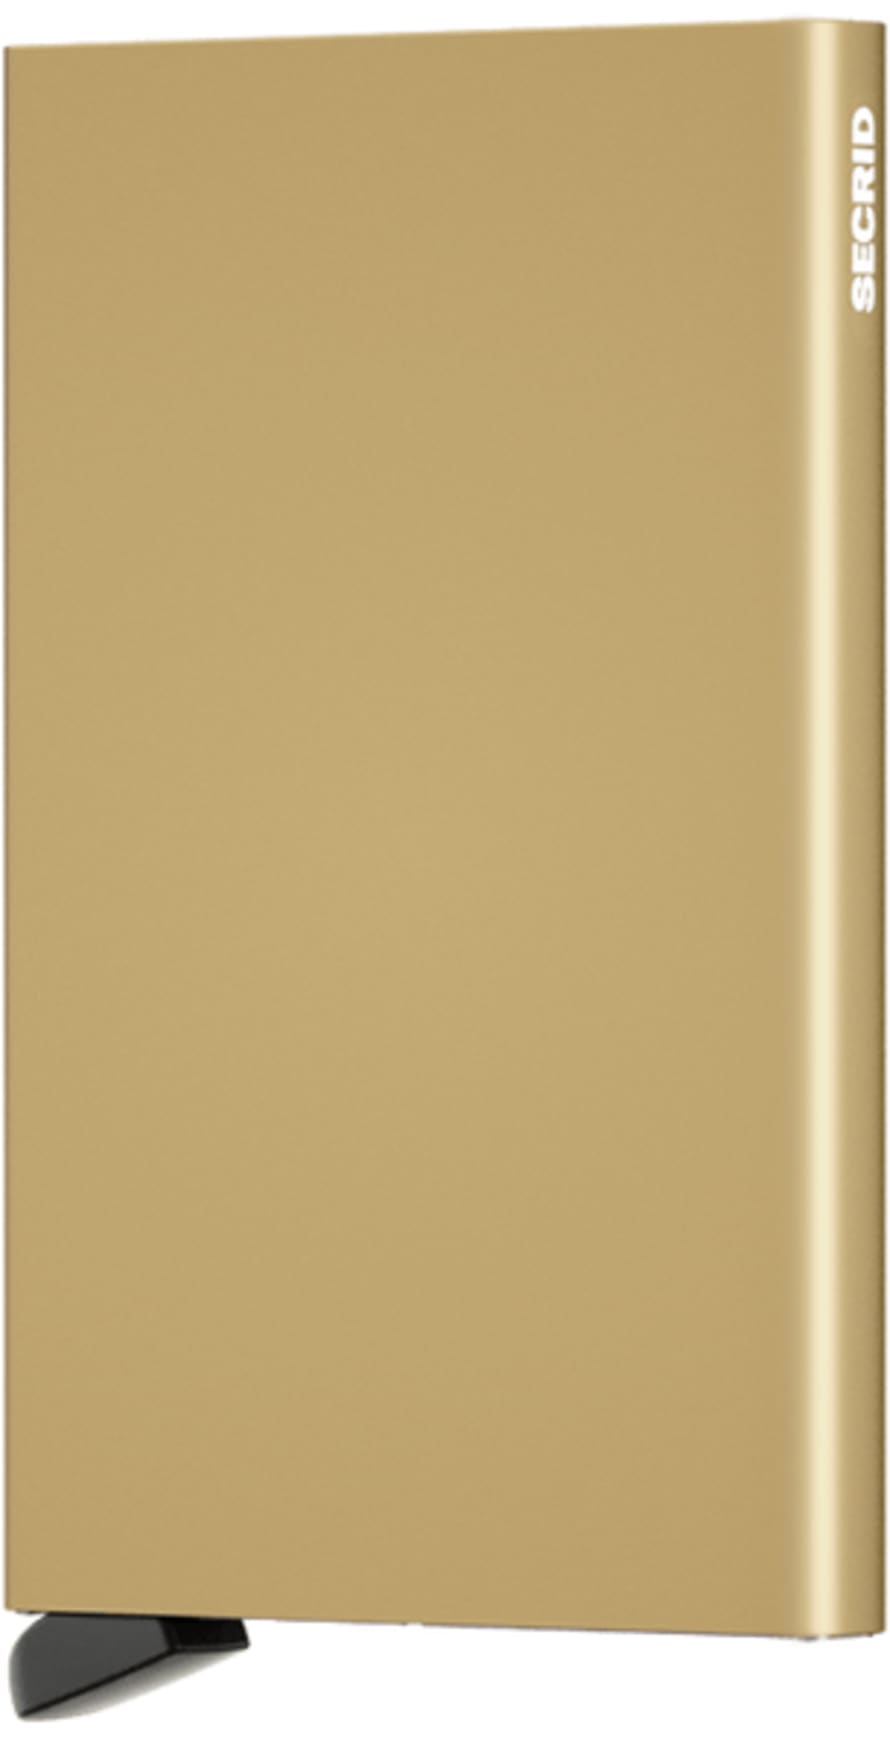 Secrid Gold Card Protector